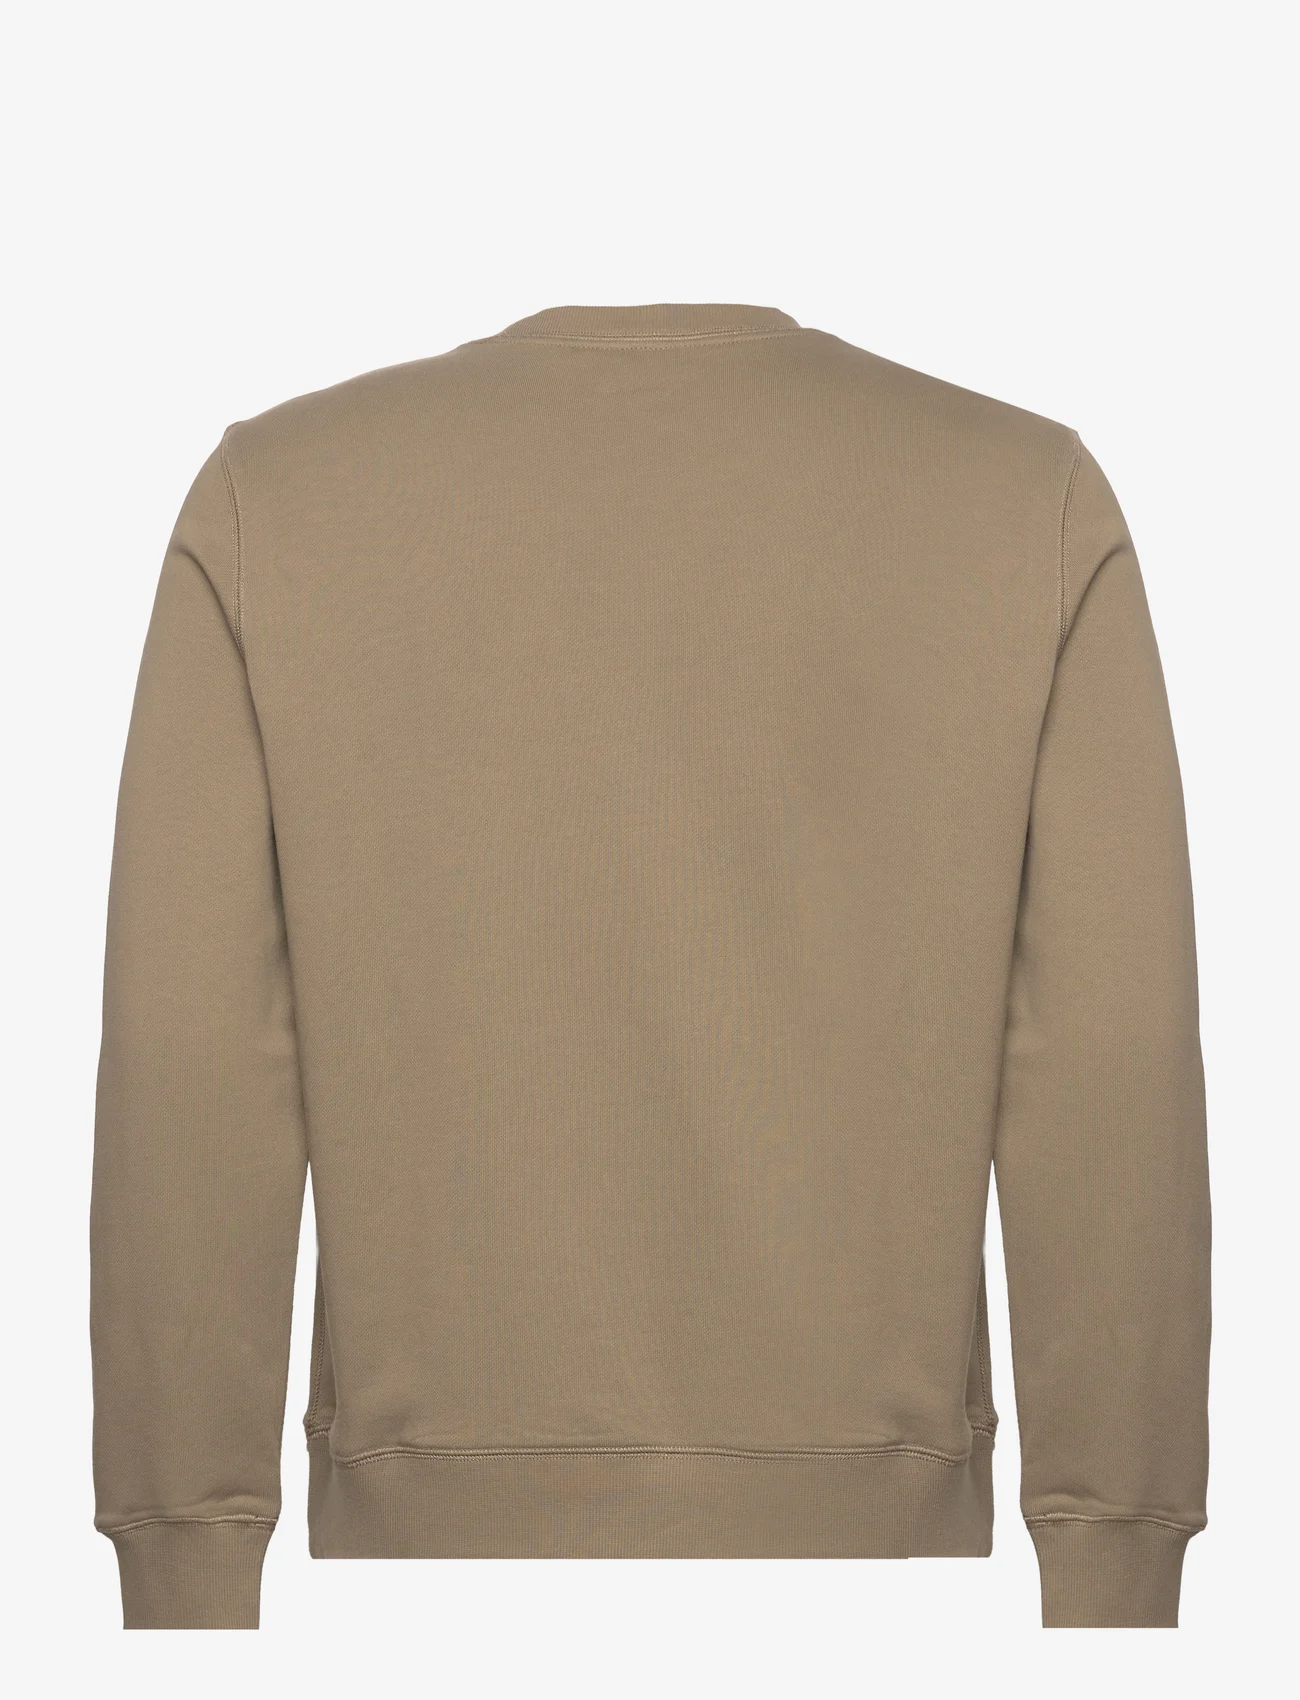 Morris - Carter Sweatshirt - sweatshirts - olive - 1